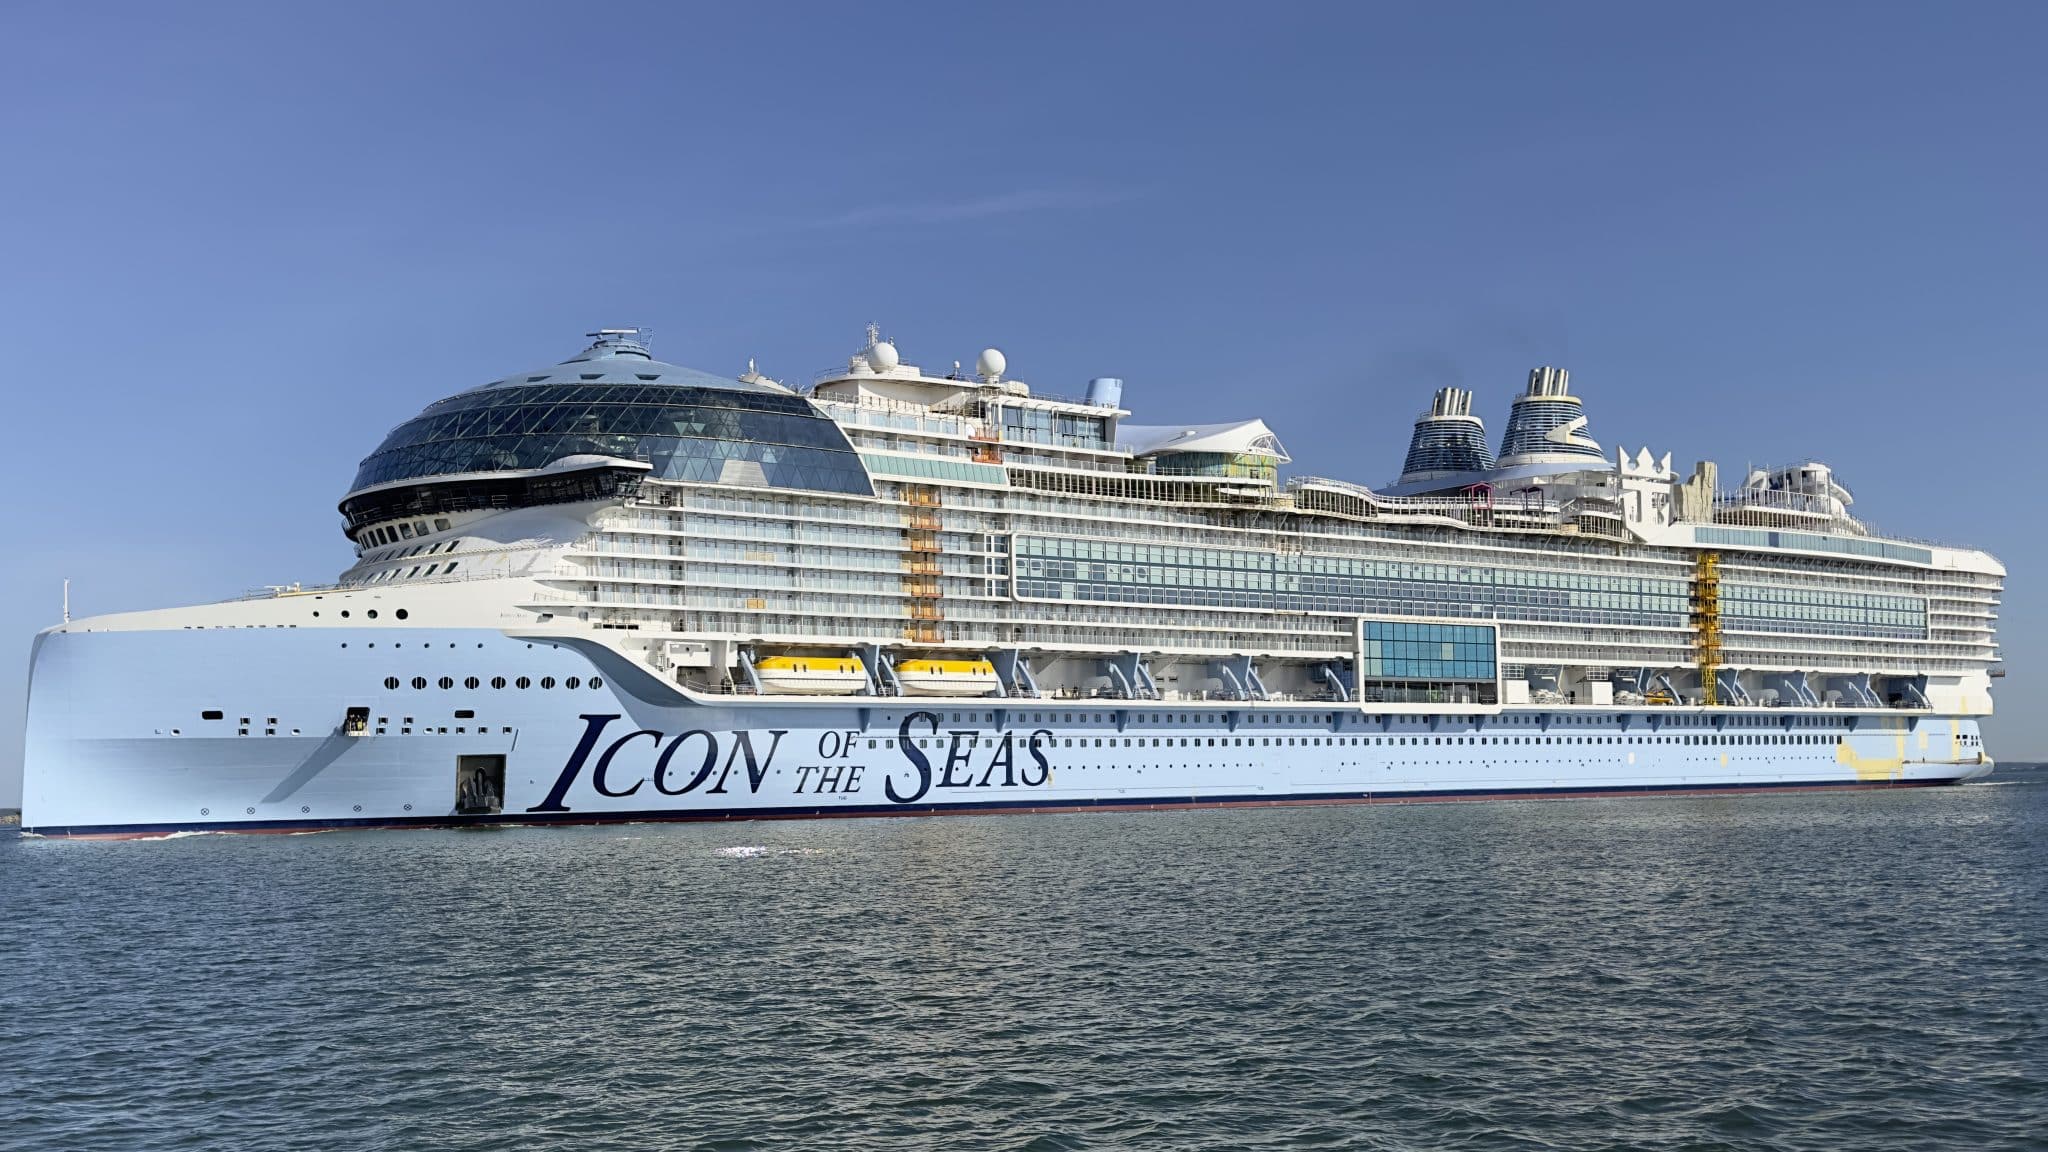 Royal Caribbean's Icon of the Seas cruise ship